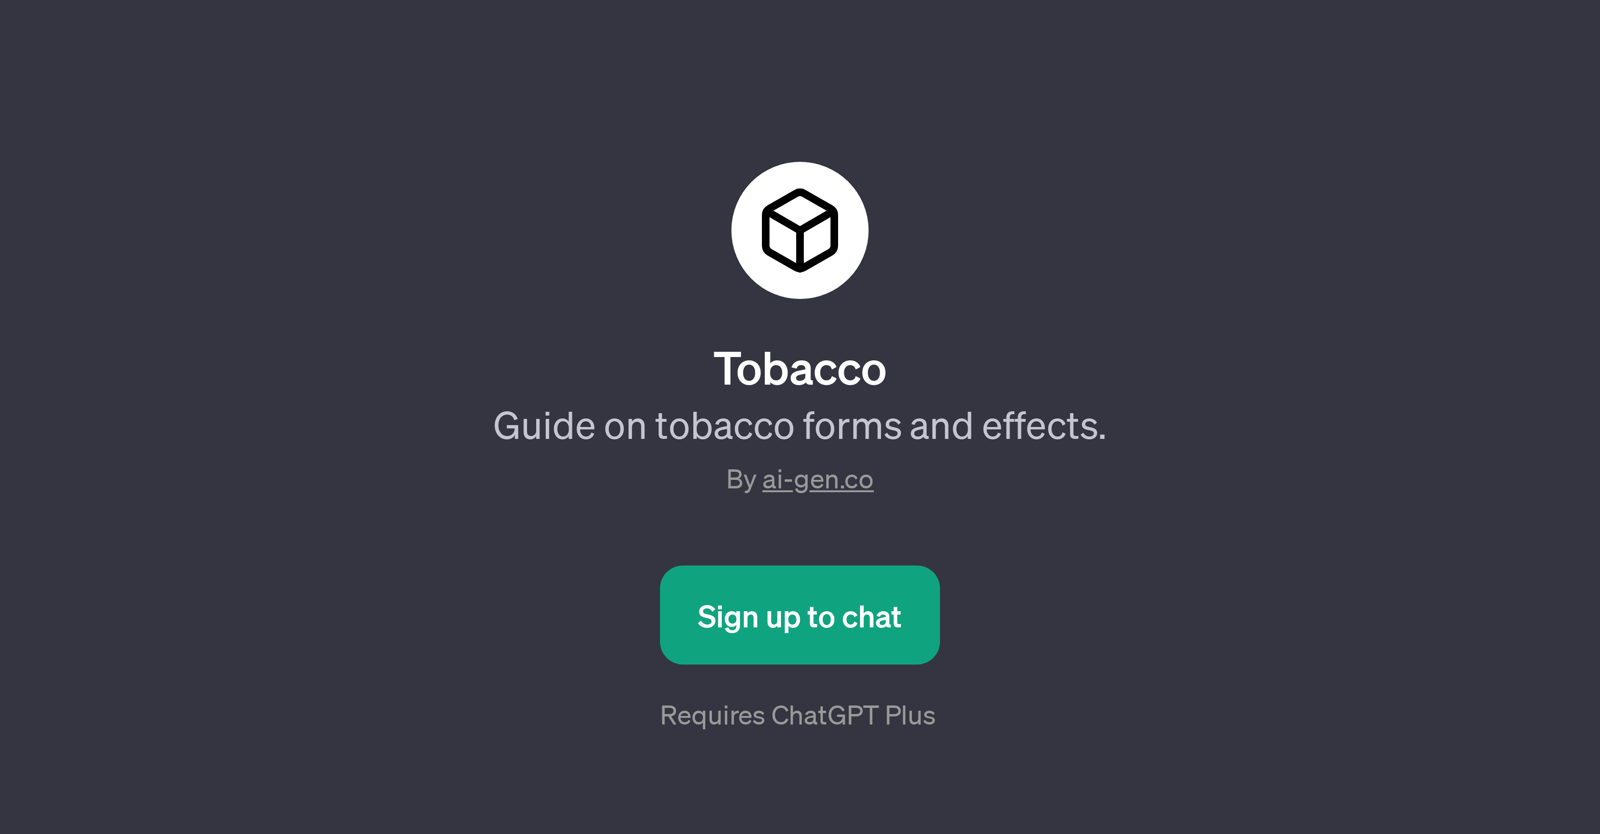 TobaccoPage website